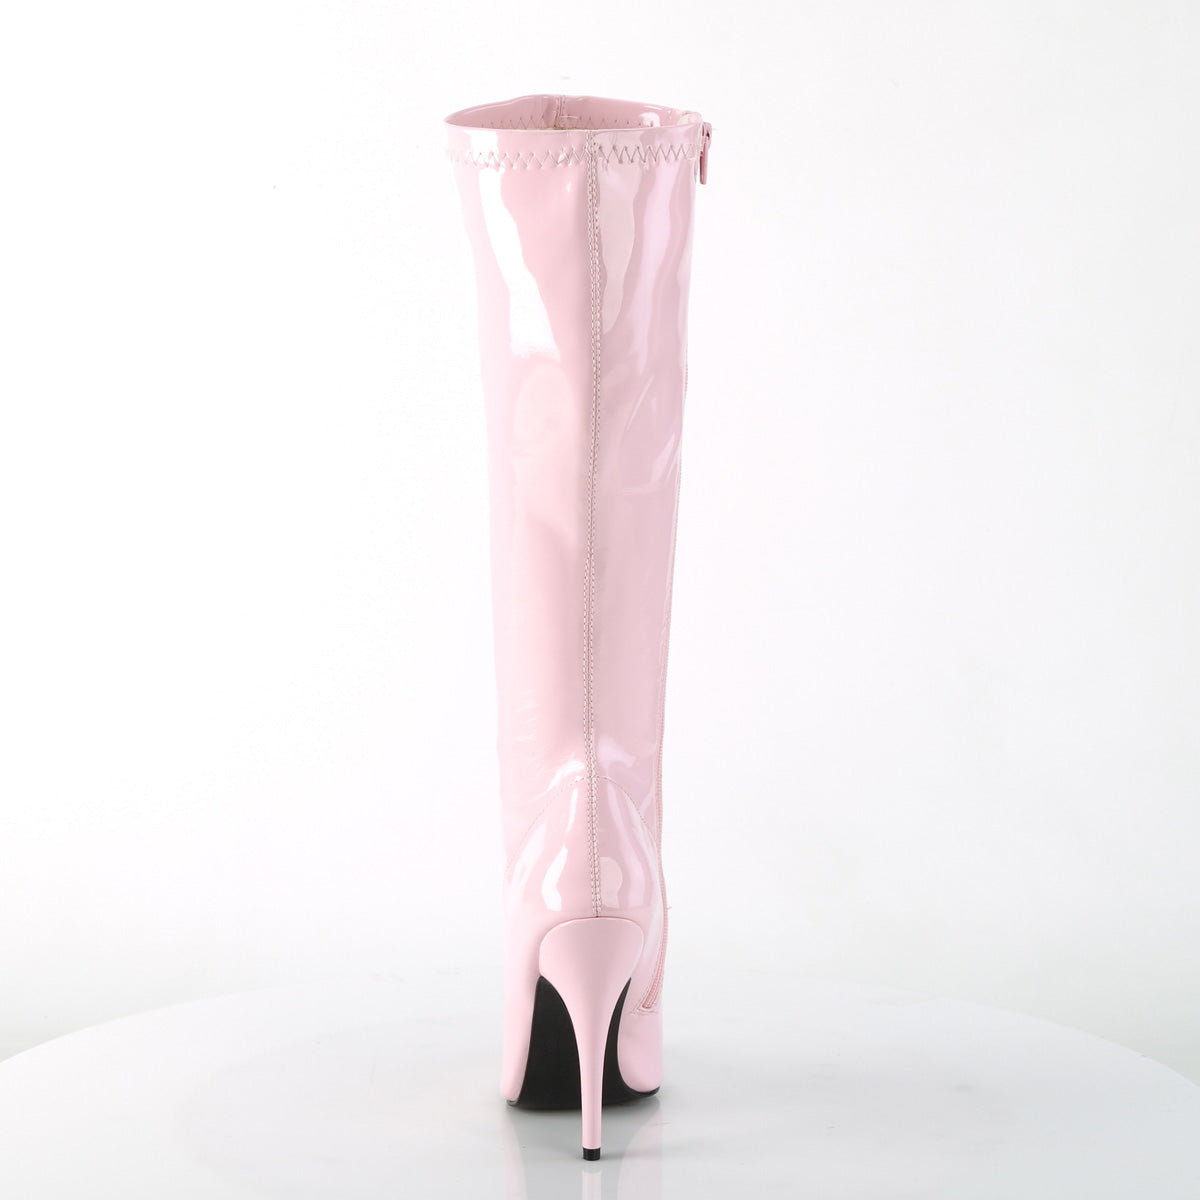 5 Inch Heel SEDUCE-2000 Baby Pink Stretch Patent